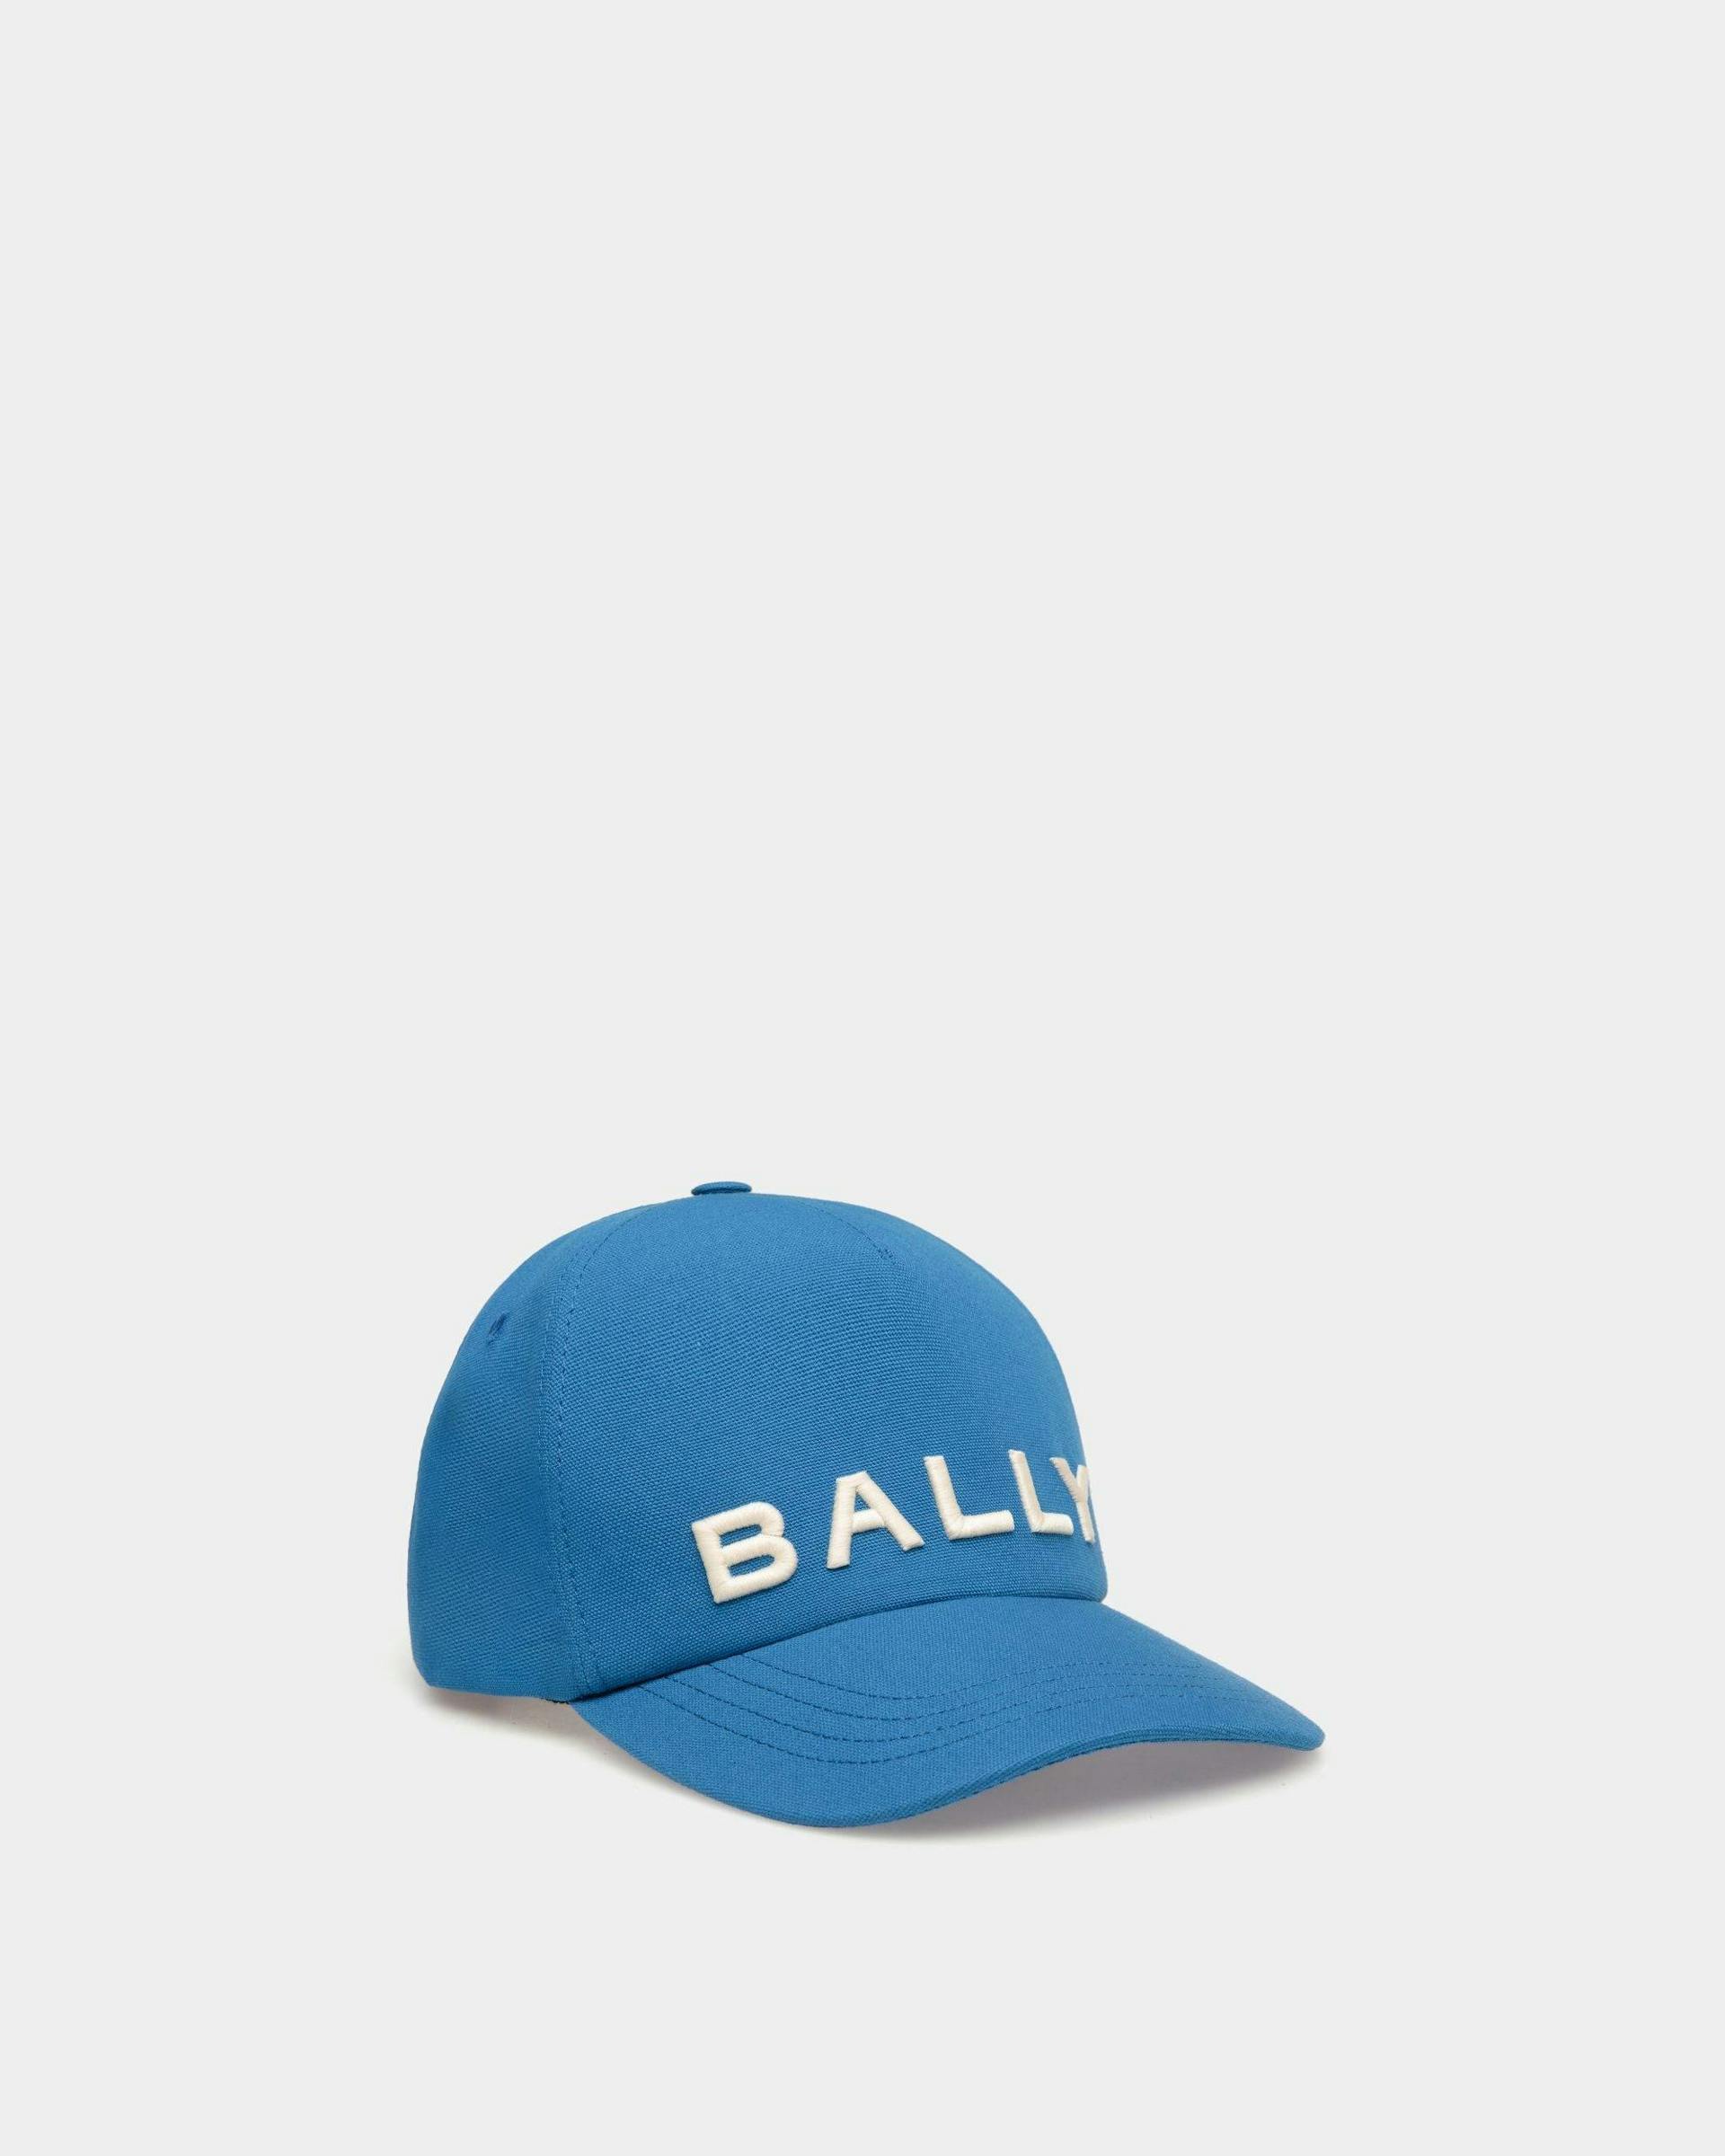 Men's Baseball Hat In Blue Cotton | Bally | Still Life Front